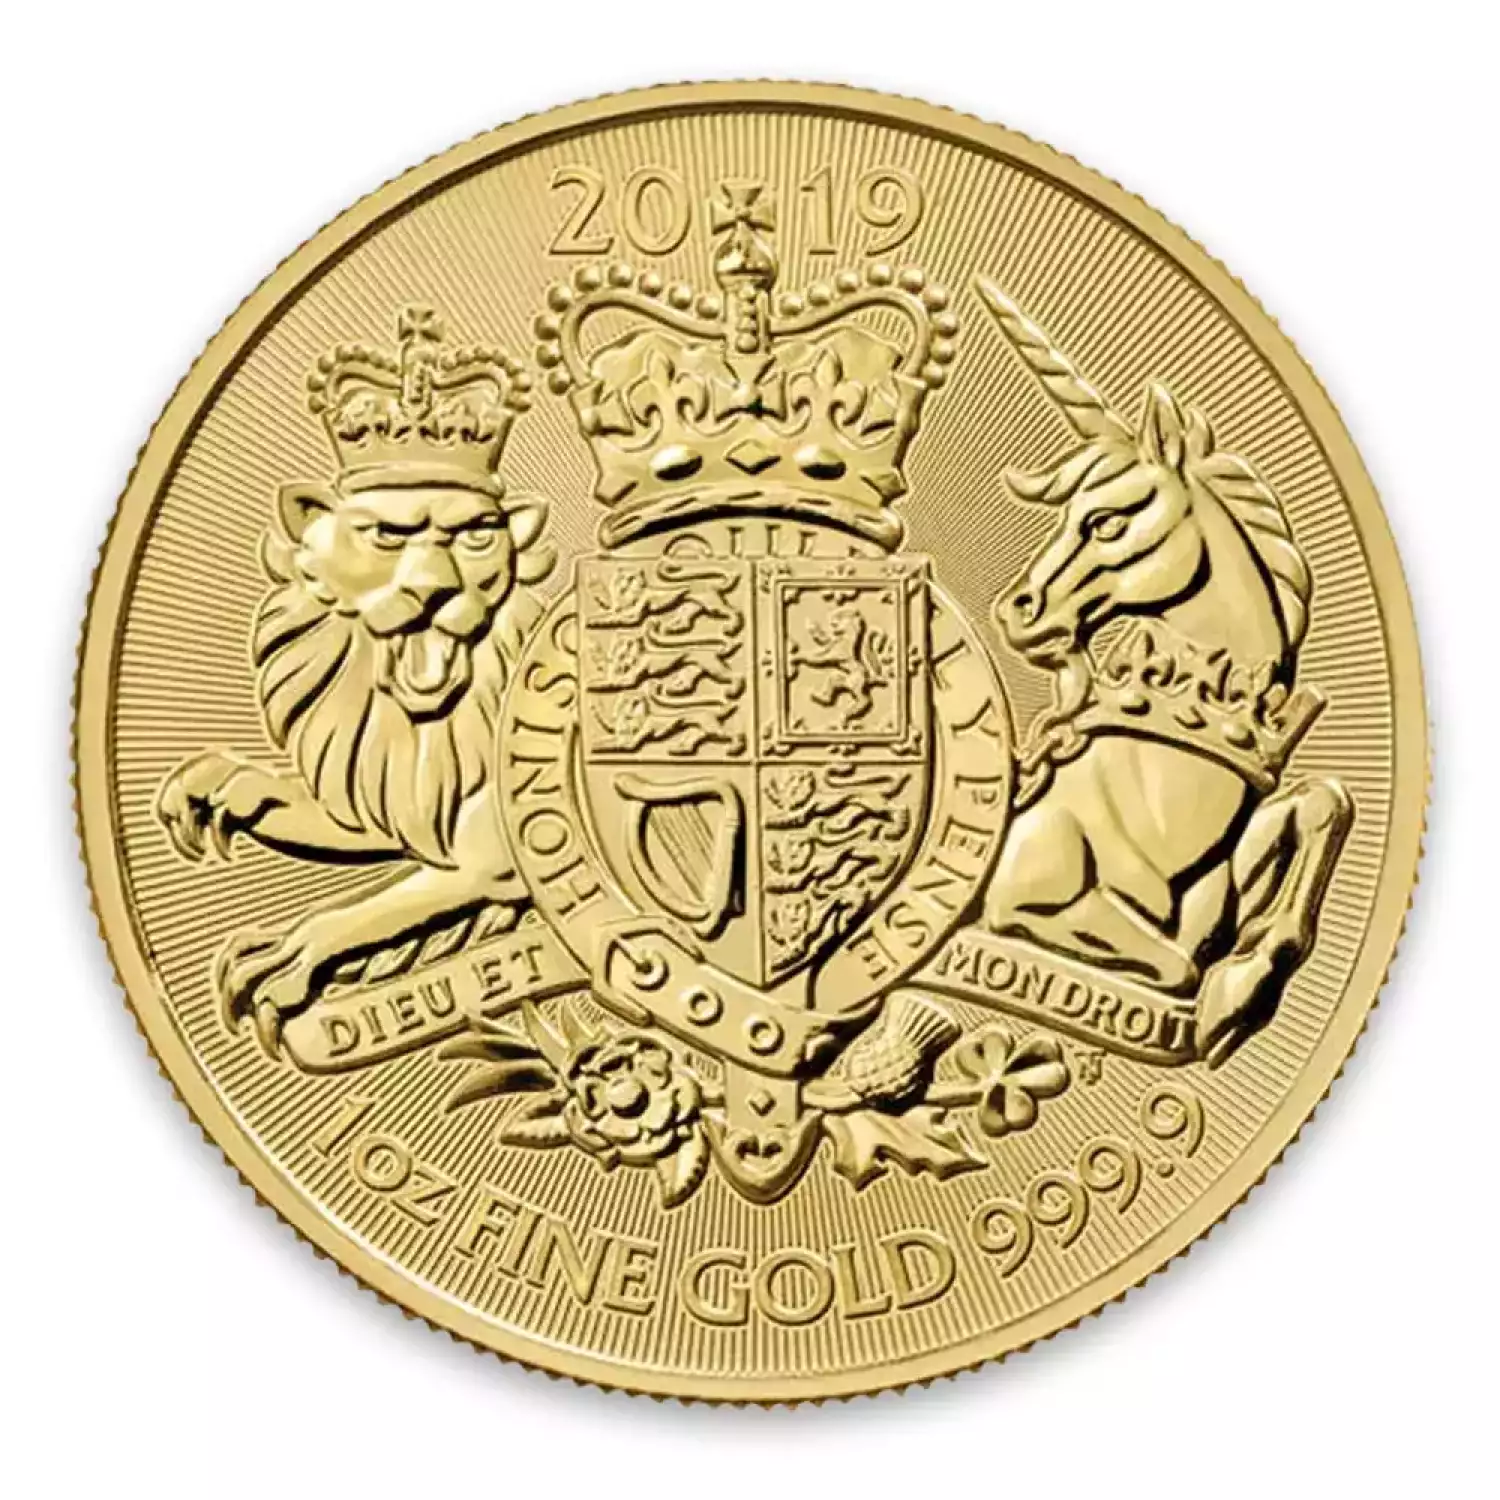 2019 1oz British Royal Arms Gold Coin (2)